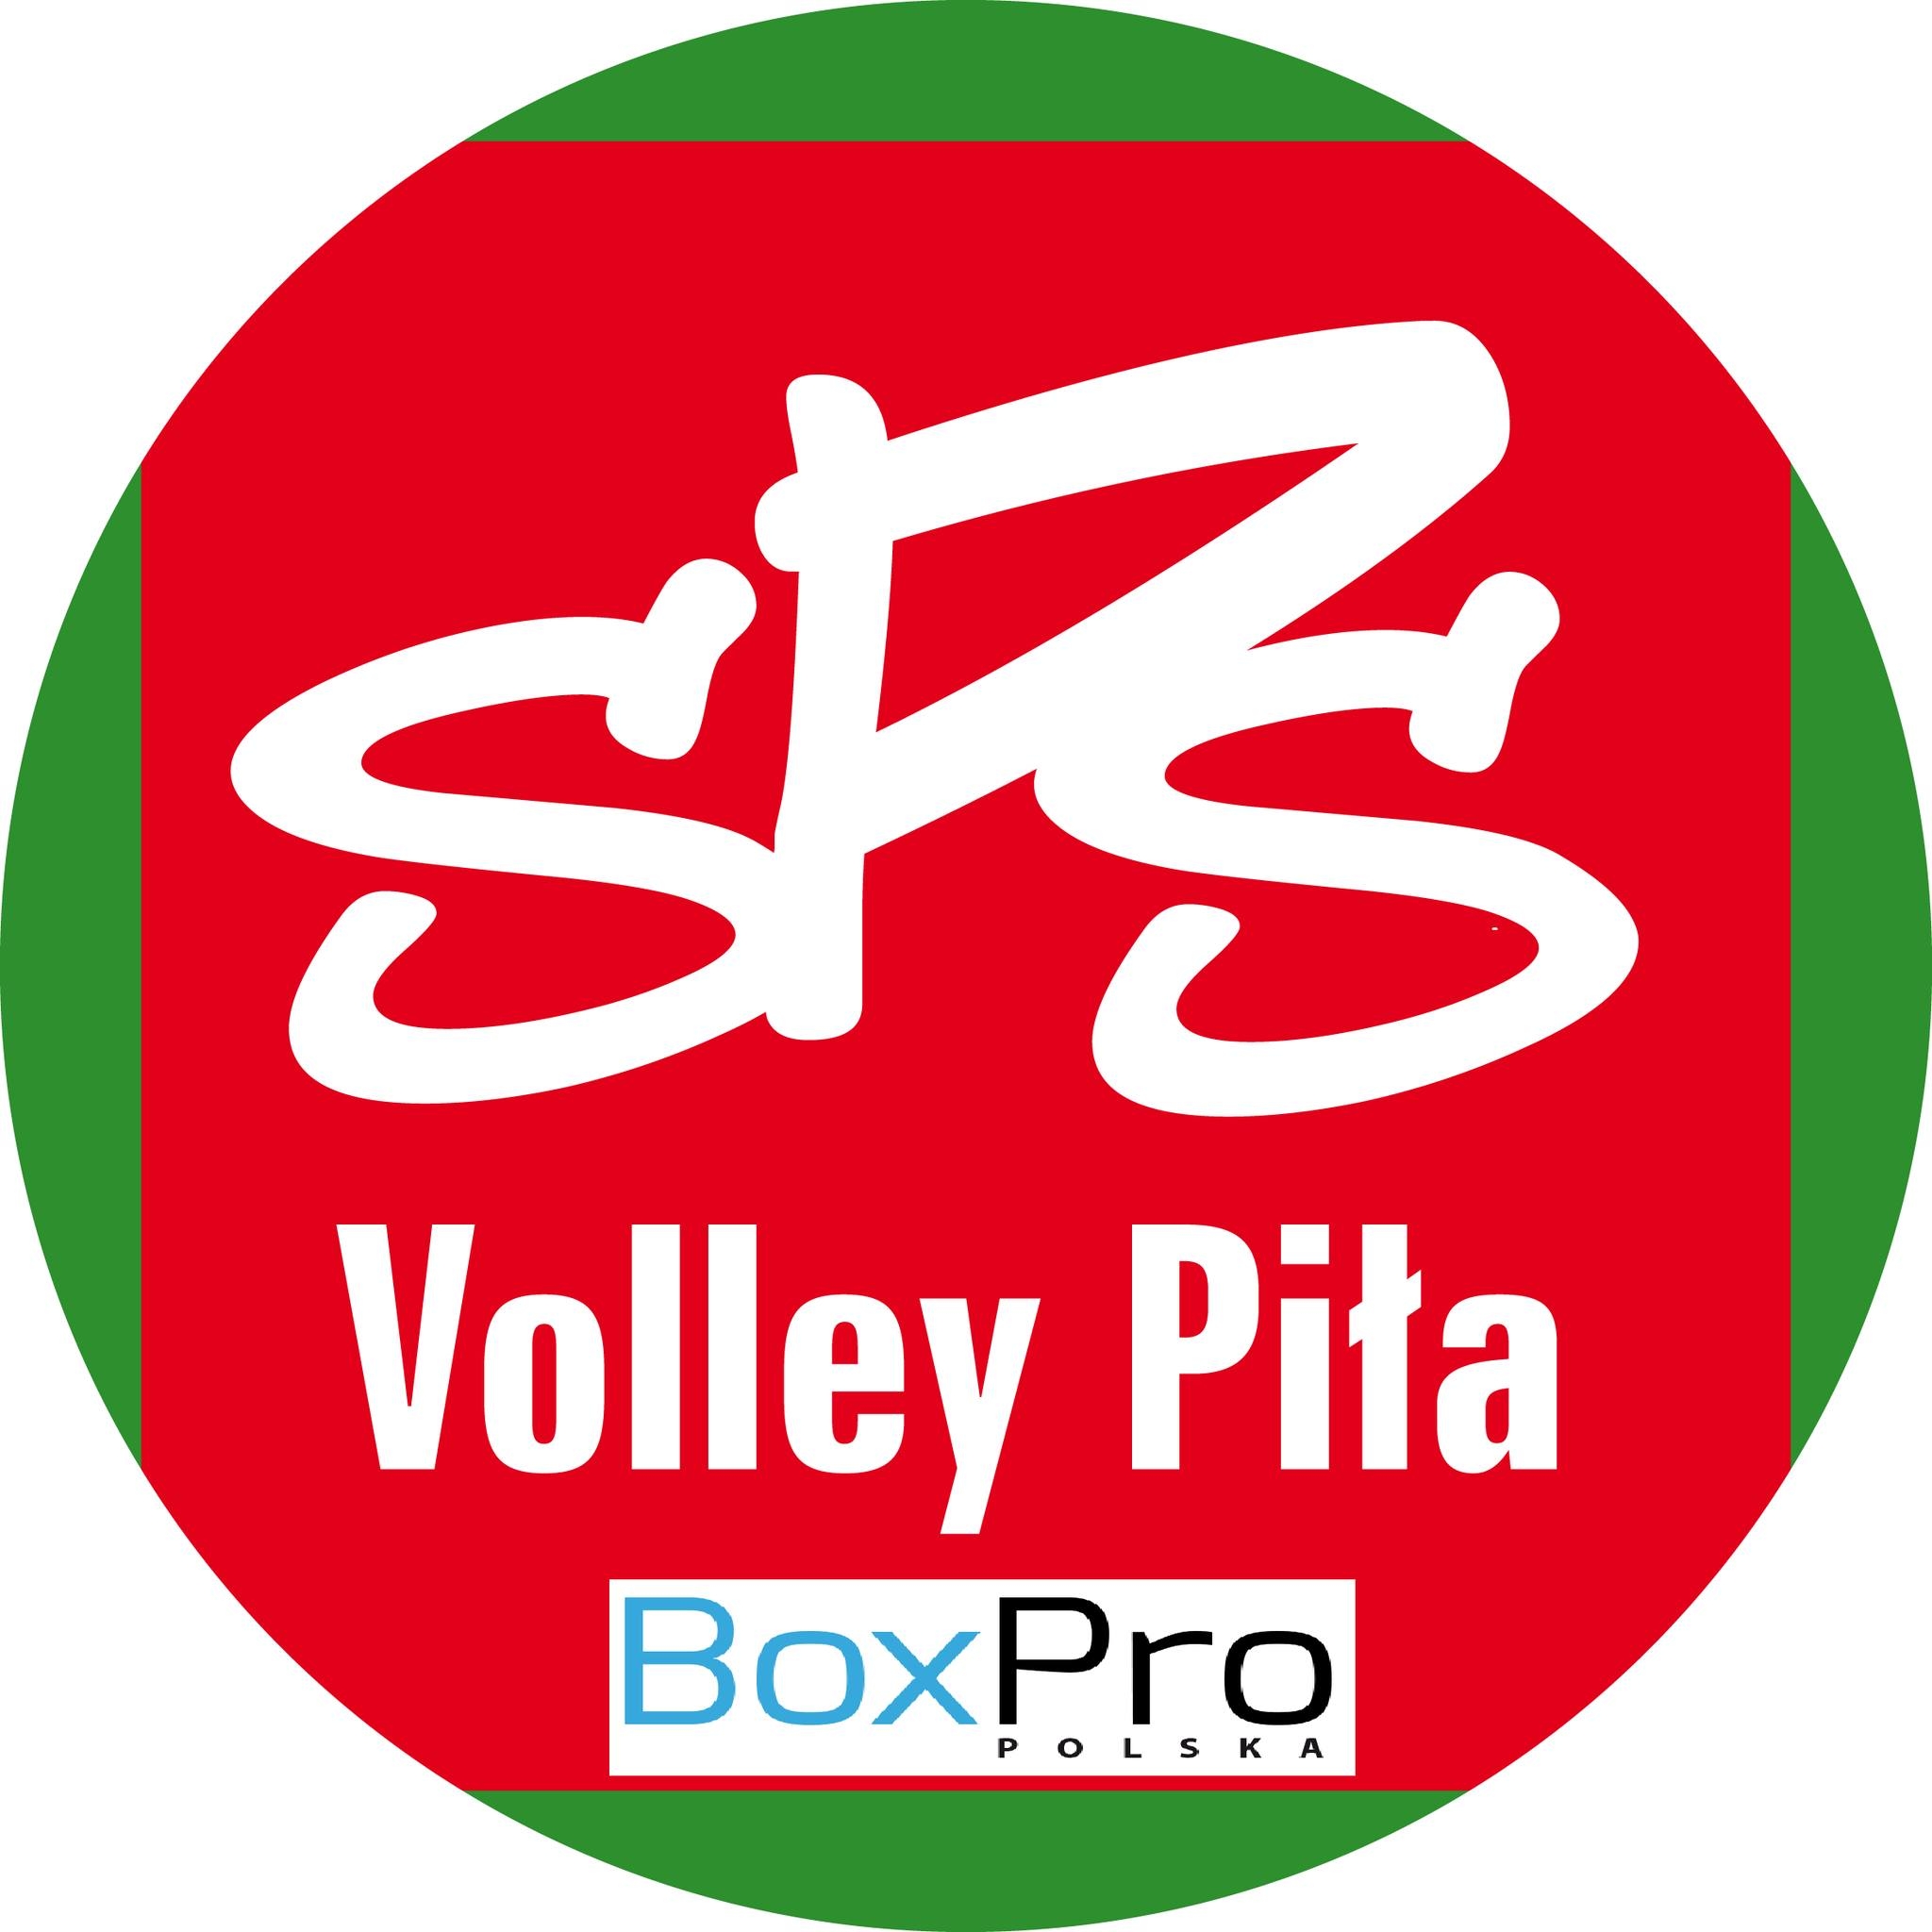 SPS BoxPro Volley Piła Logo